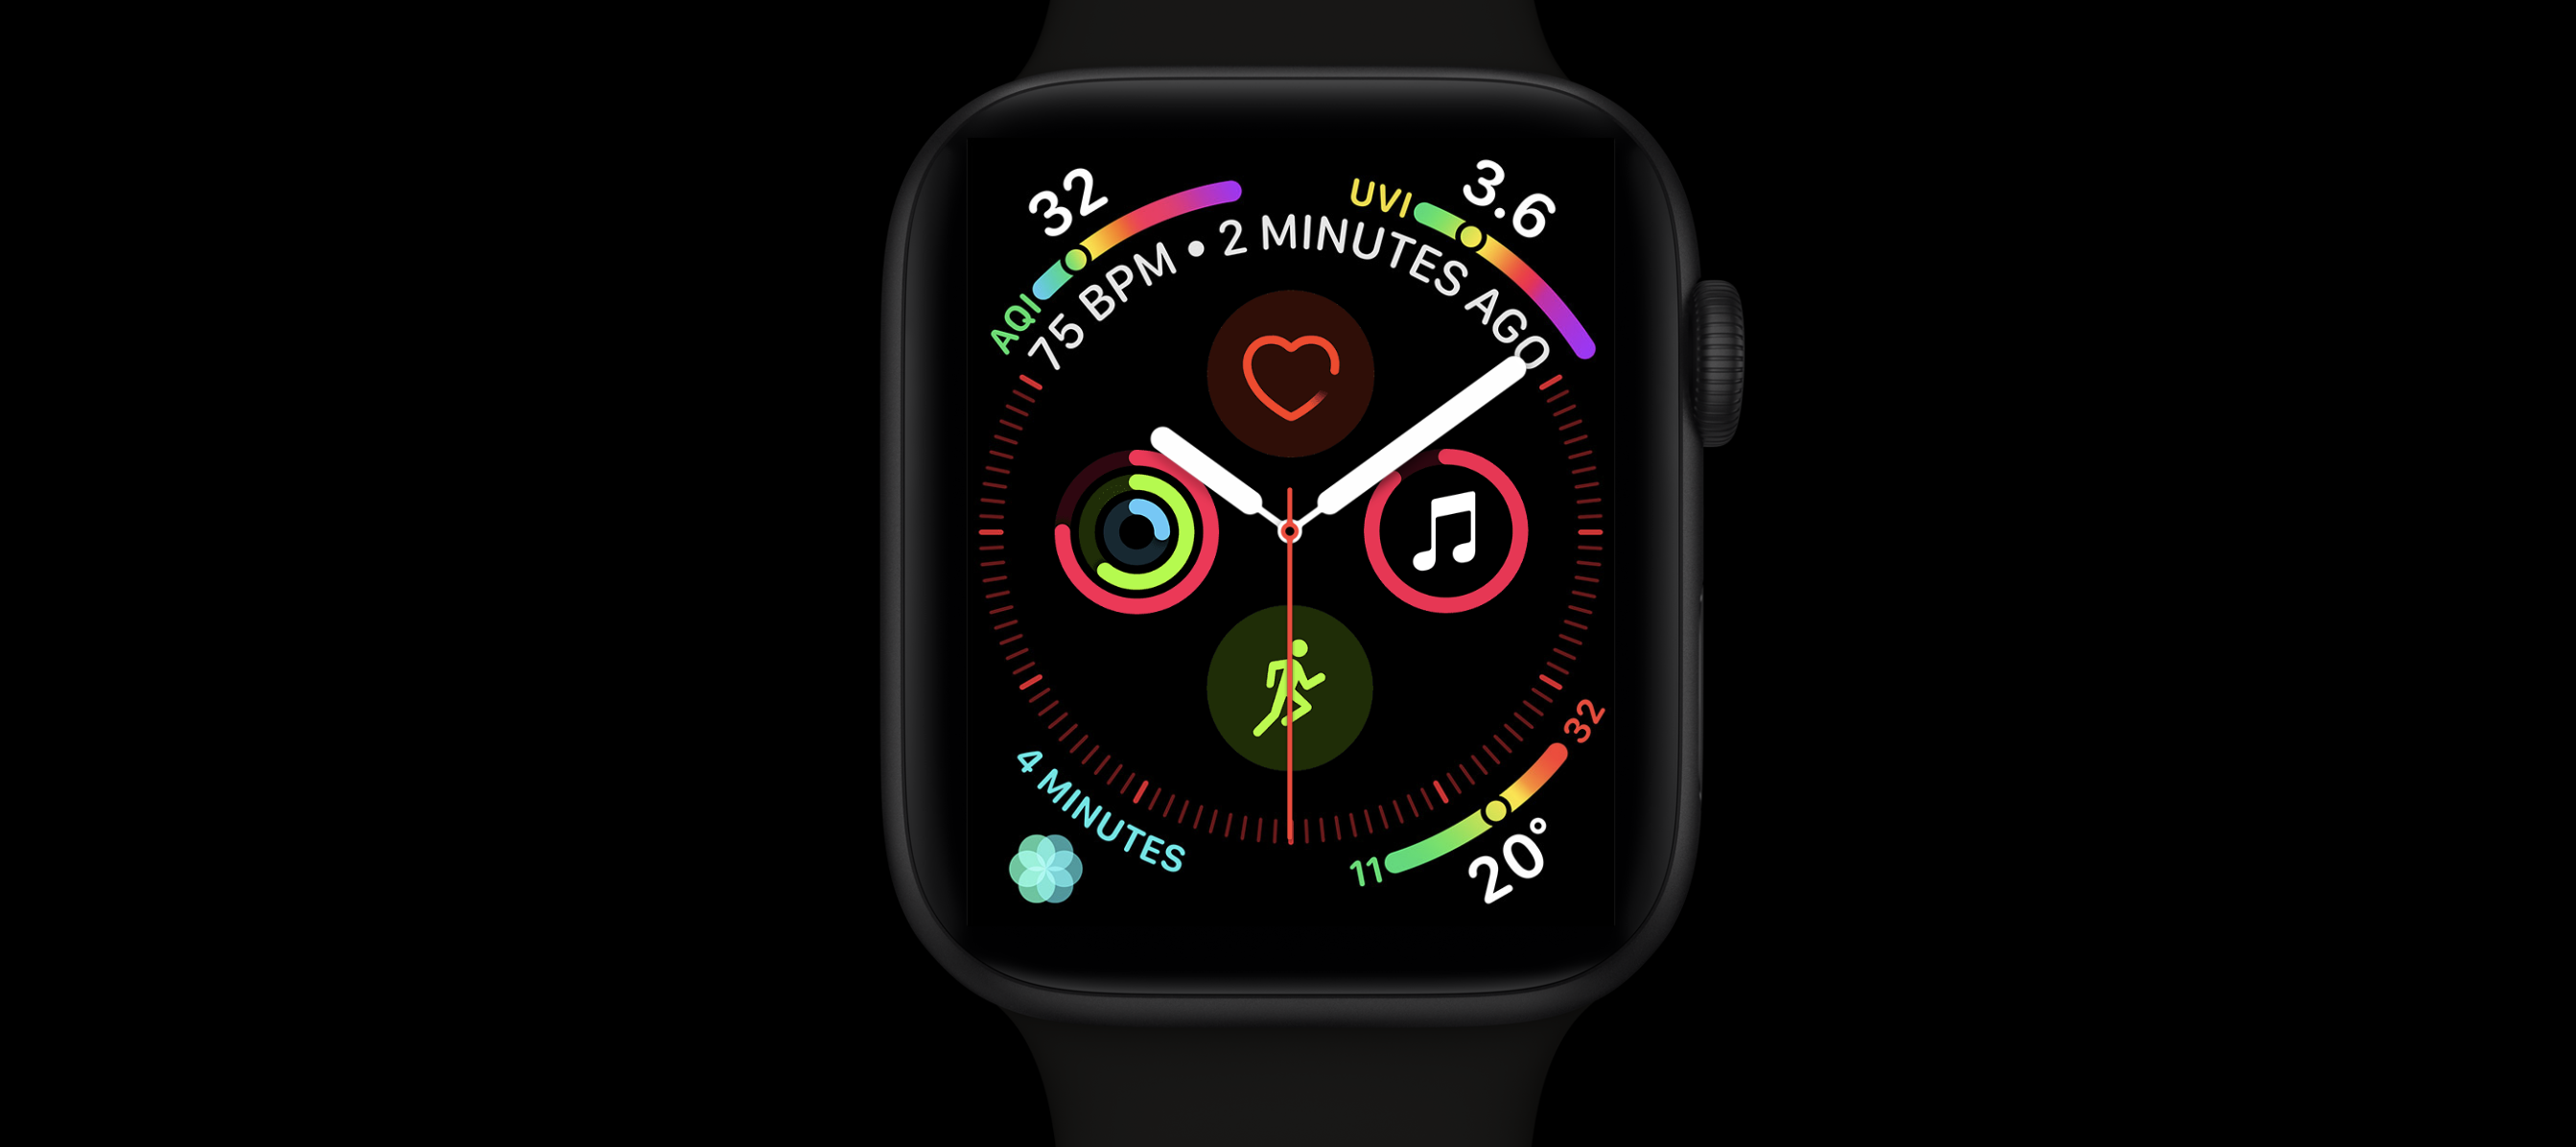 Циферблаты для смарт часов. Циферблат АПЛ вотч 4. Циферблат Эппл вотч. Apple watch Series 4 циферблат инфограф. Циферблаты для смарт часов эпл.